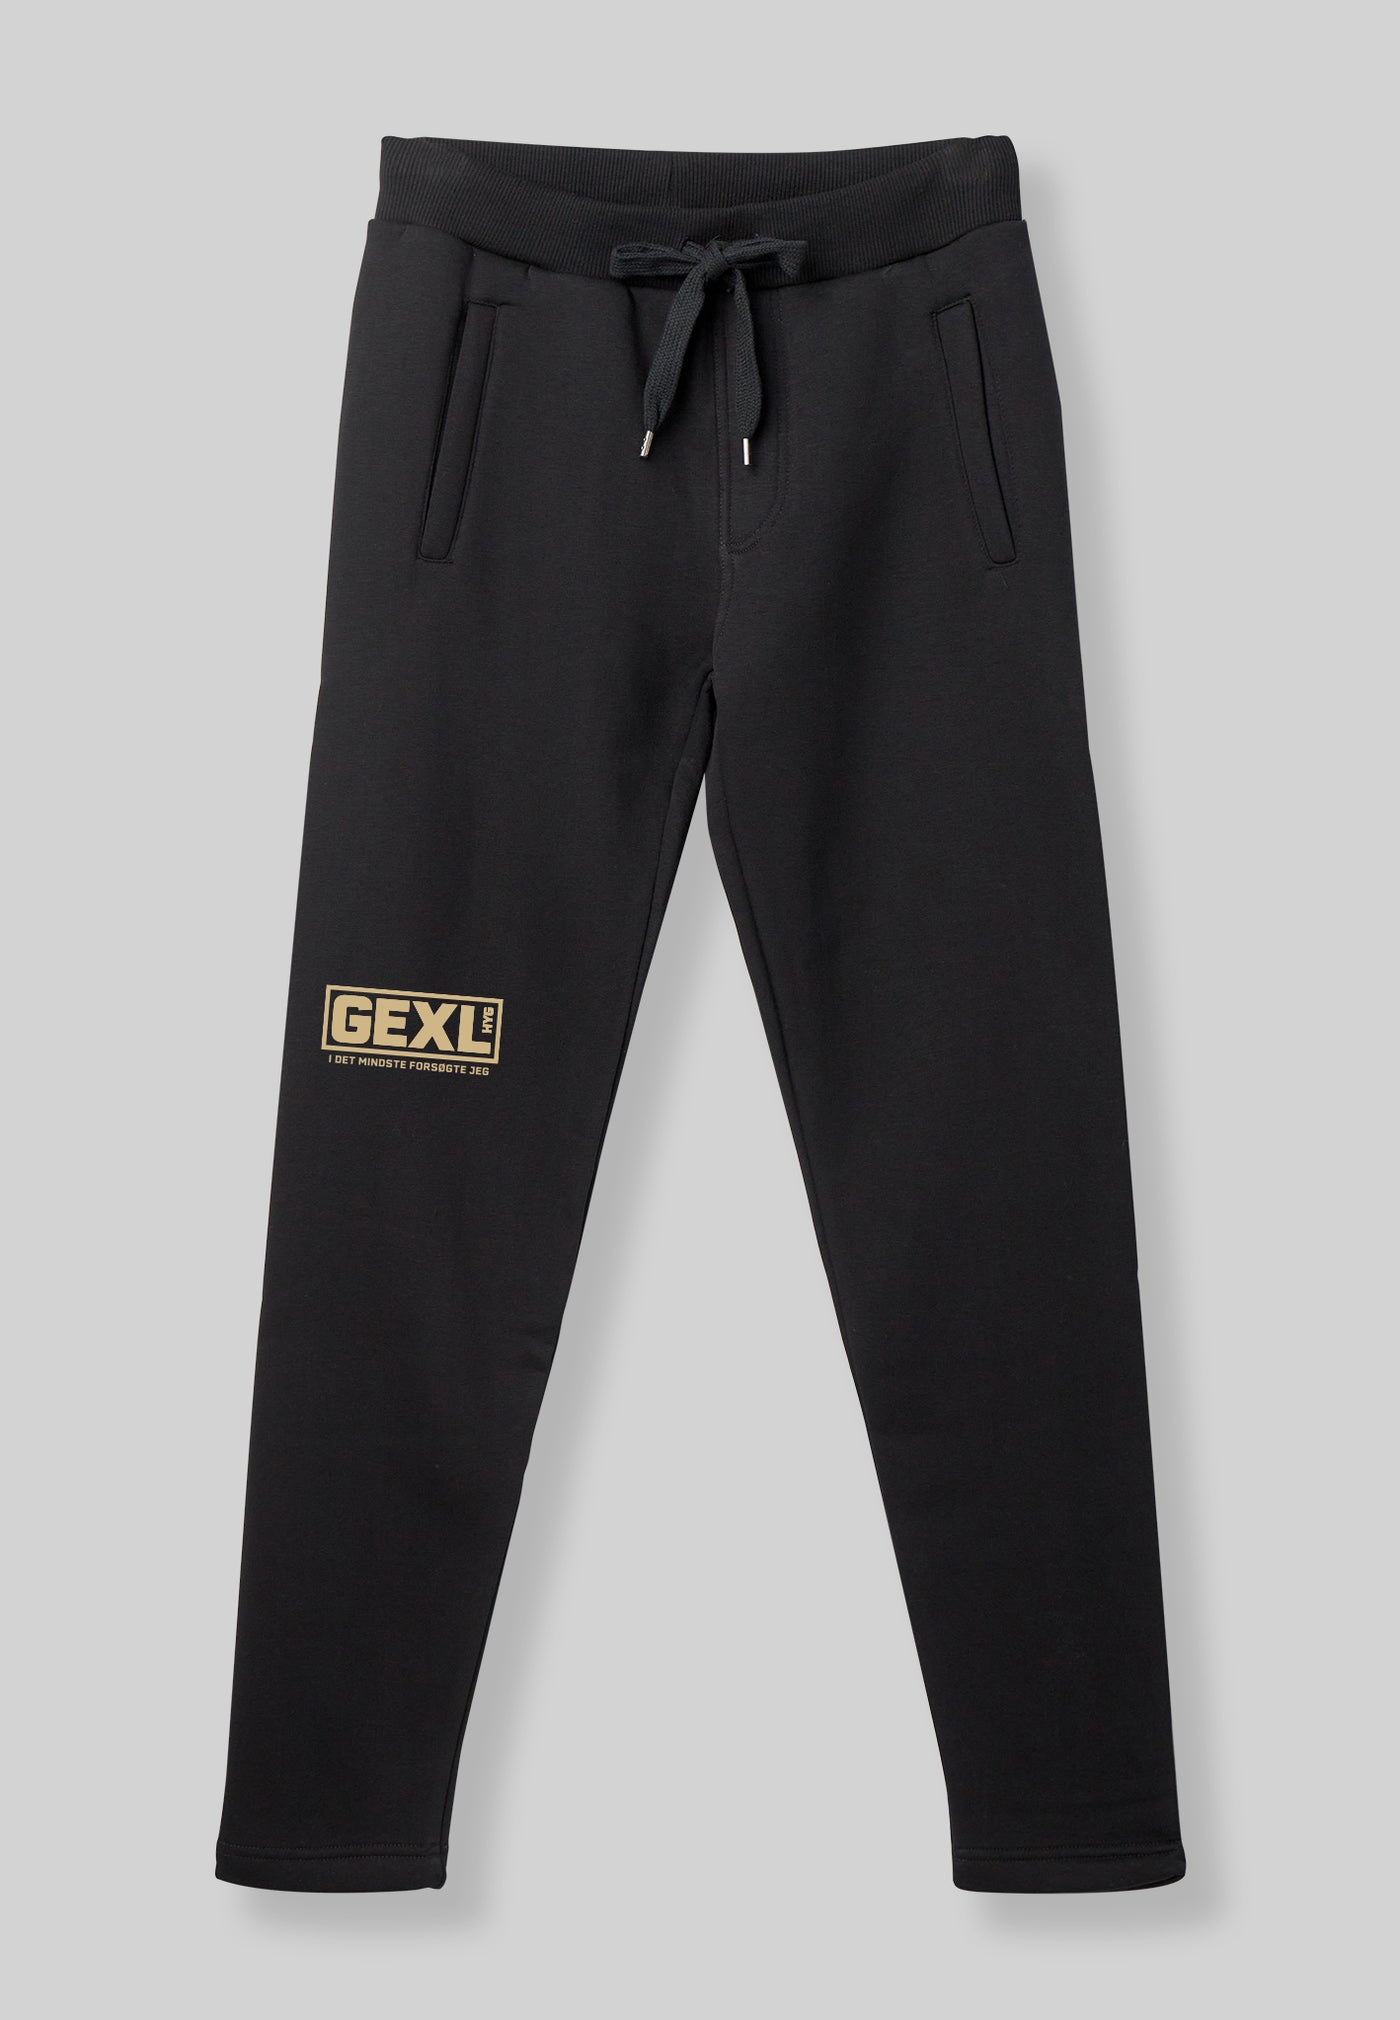 GEX - GEXL Sweatpants - Black